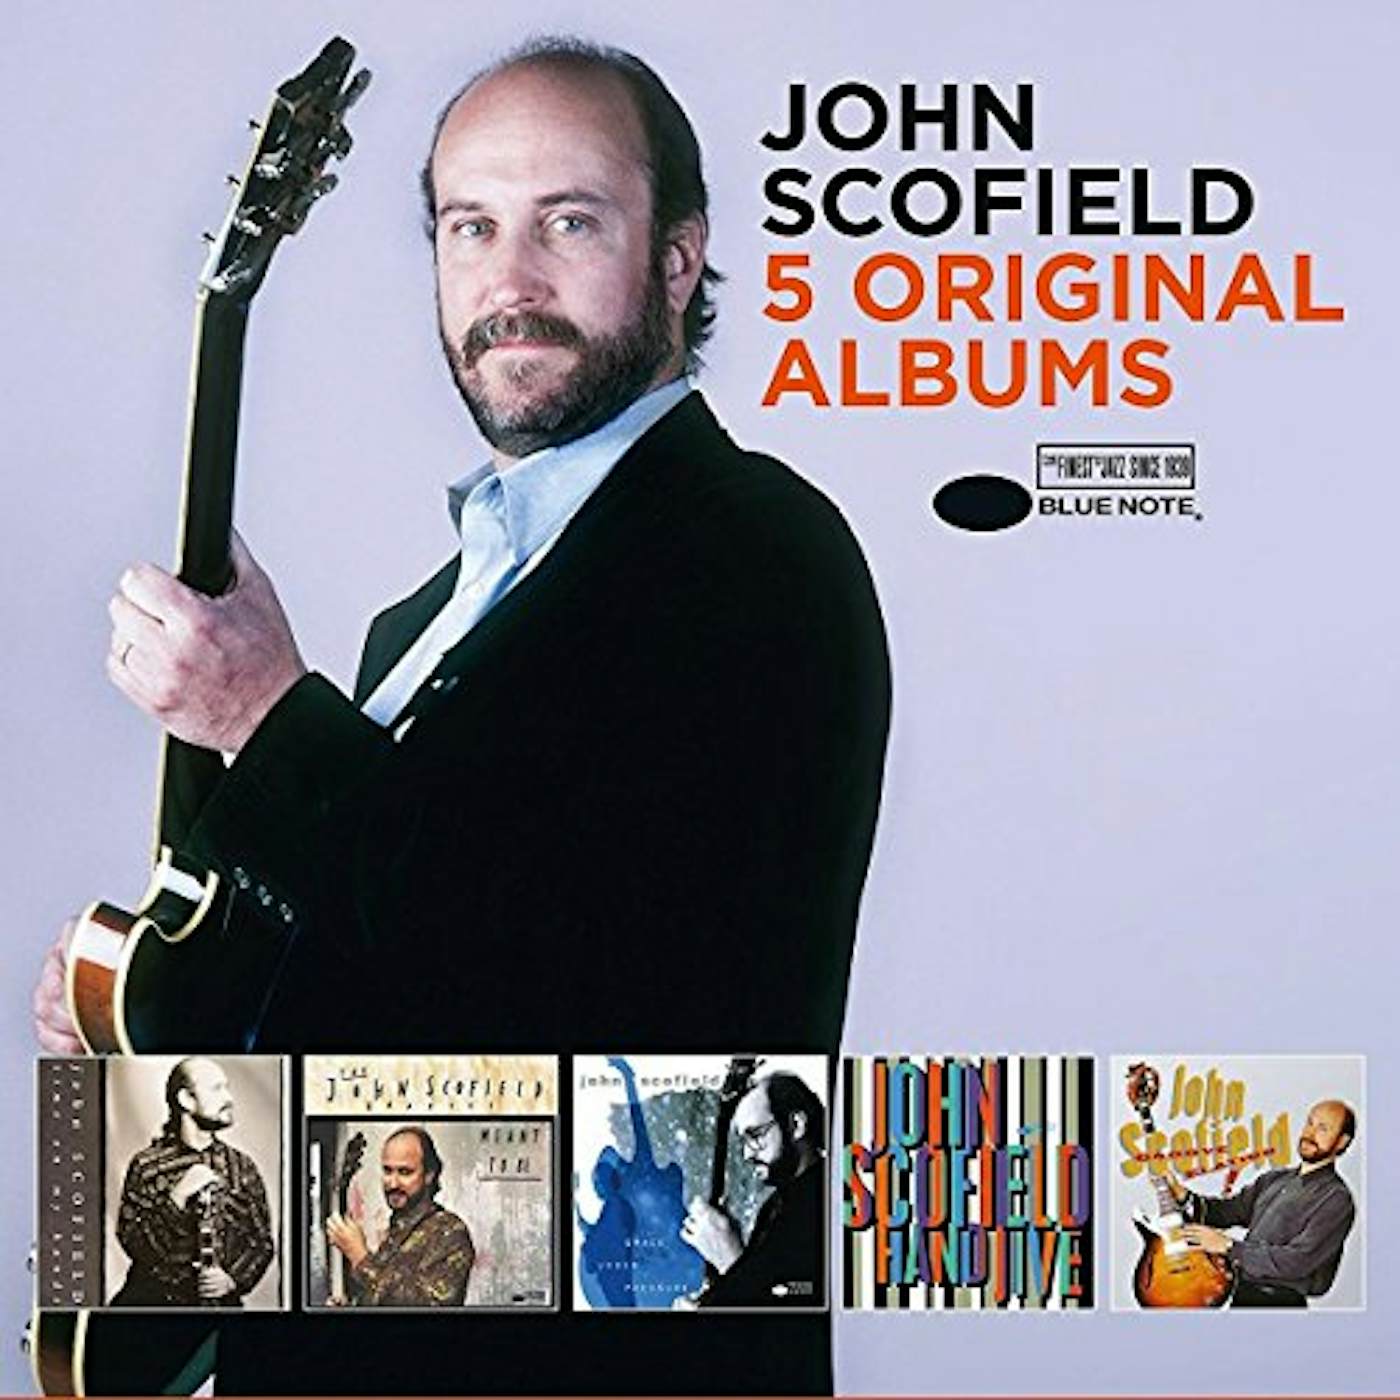 John Scofield 5 ORIGINAL ALBUMS CD